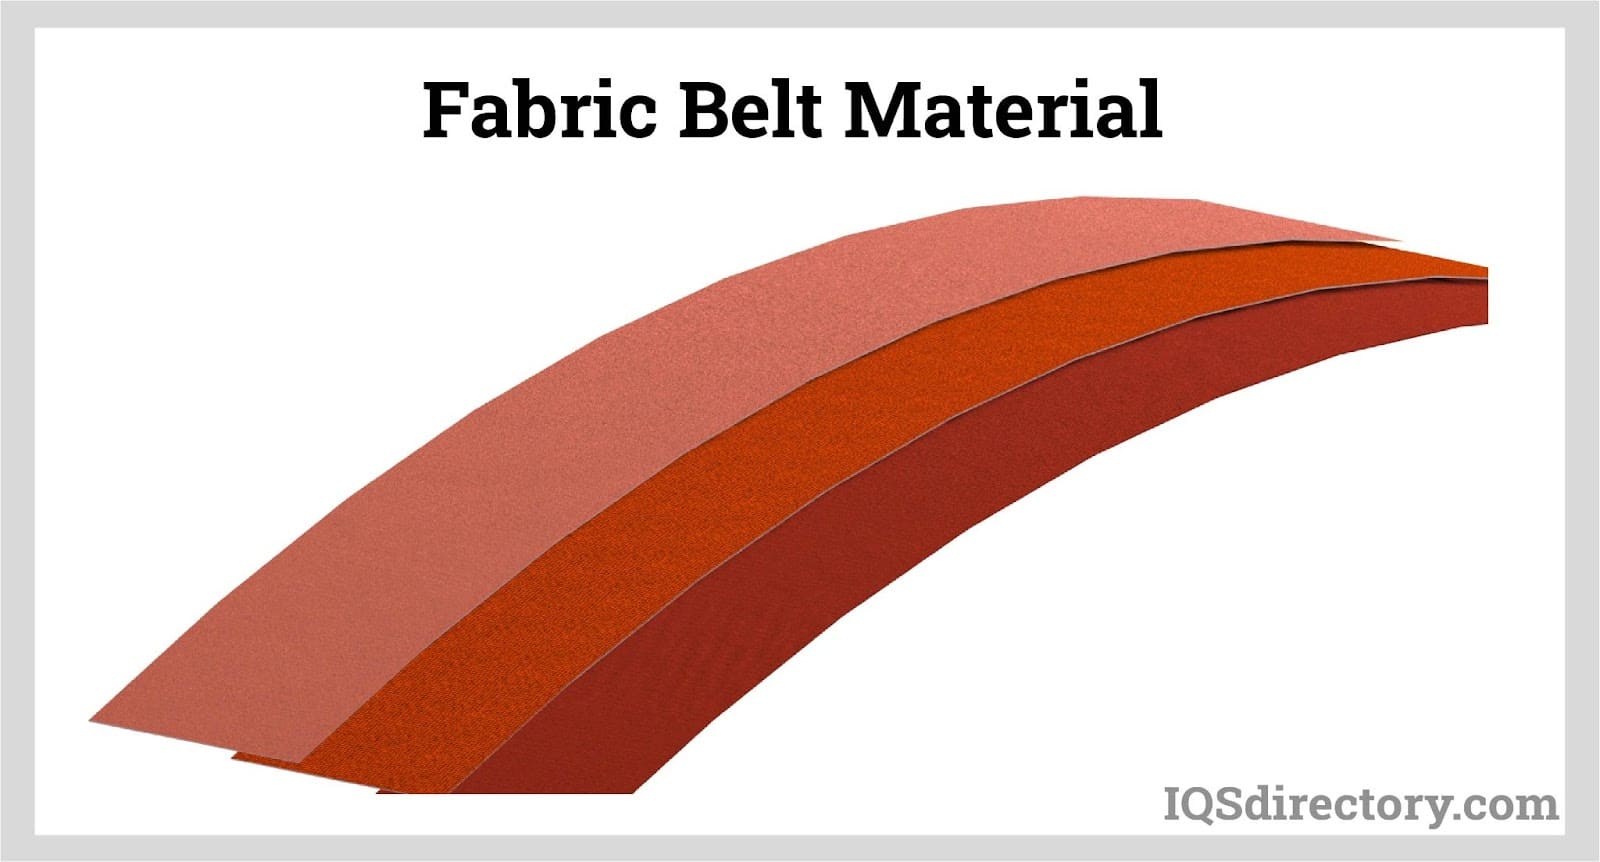 Fabric Belt Material